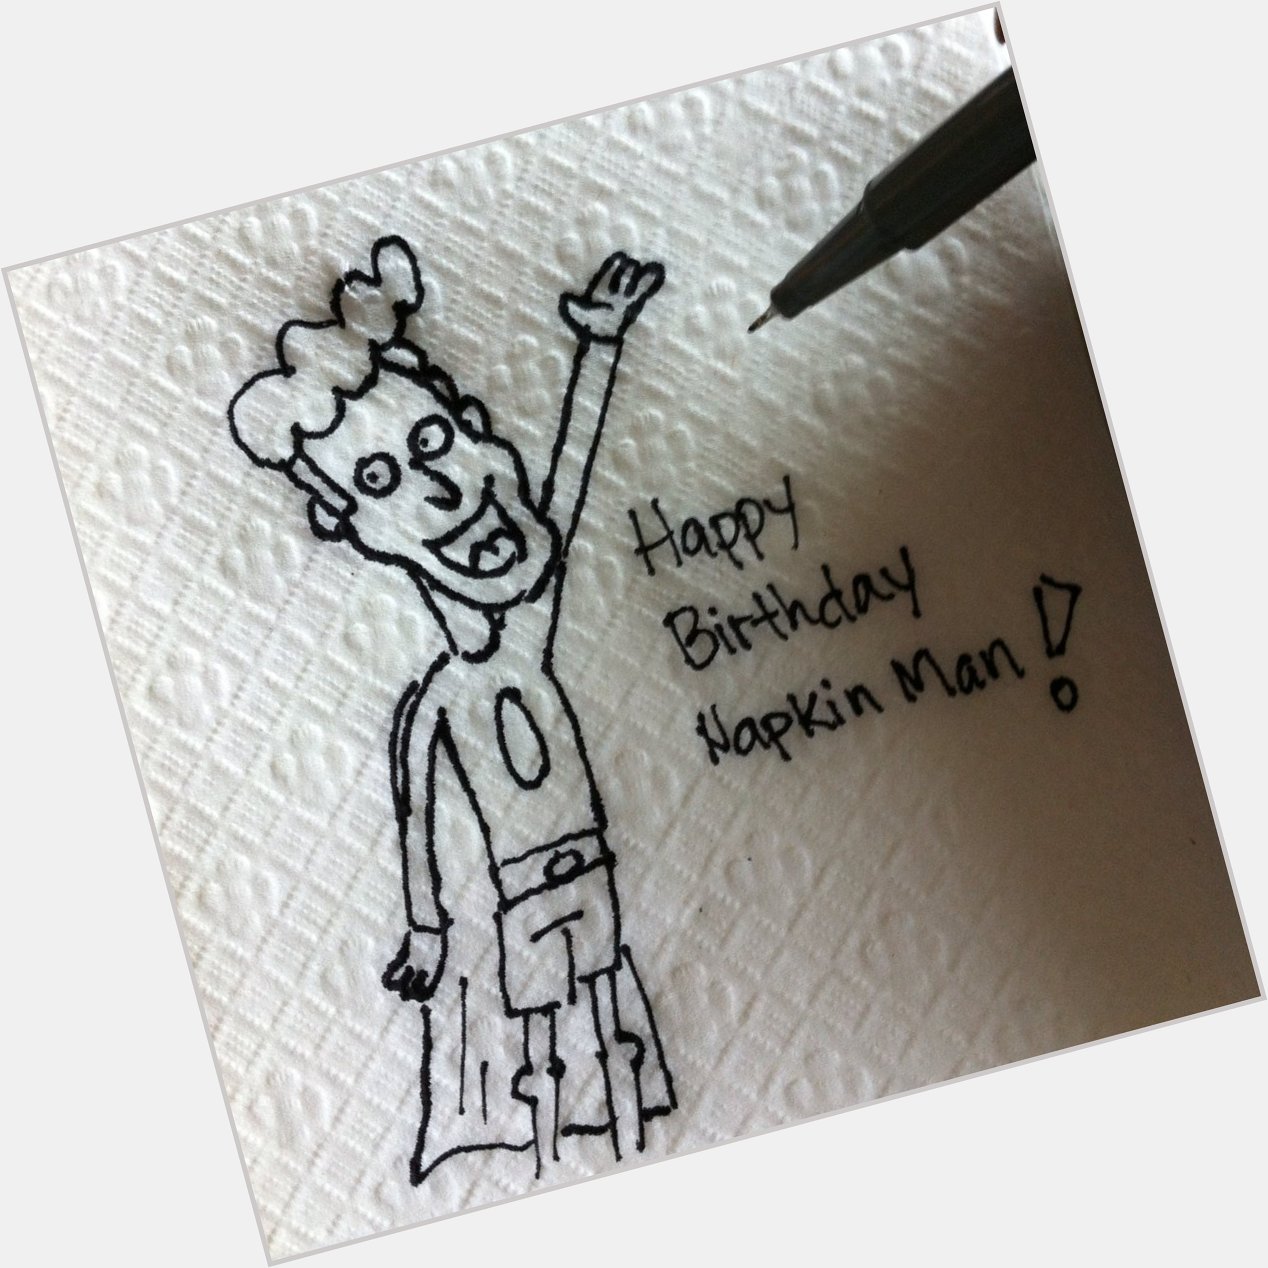 Happy Birthday Napkin Man! 